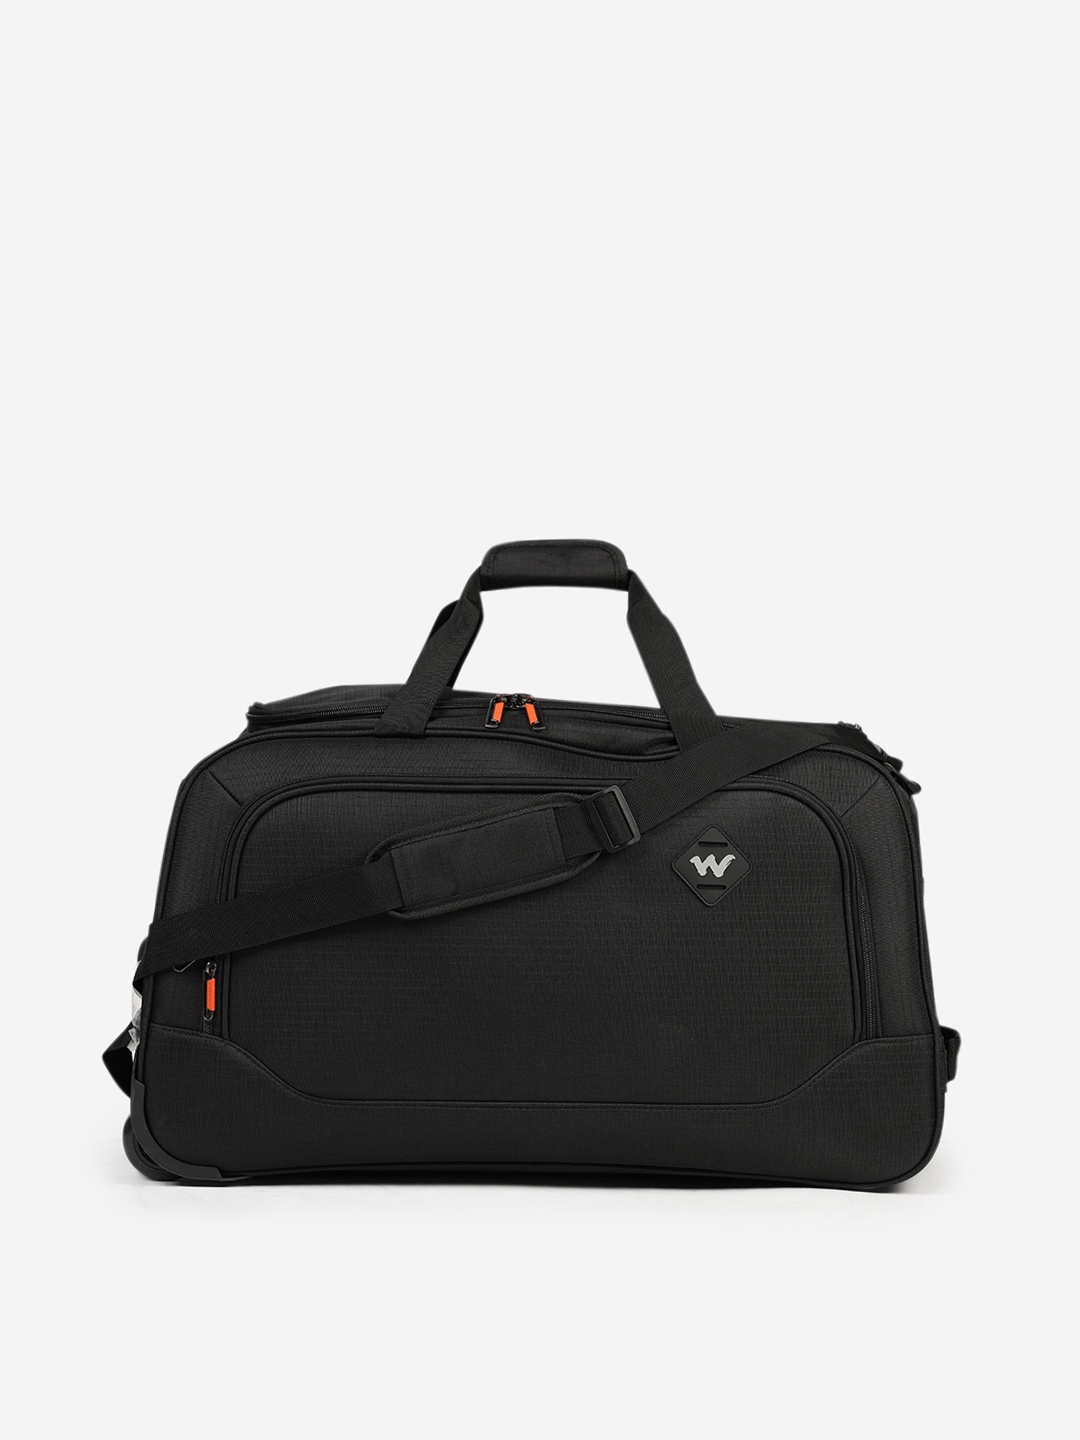 Wildcraft Black Solid Duffle Cabin Trolley Bag